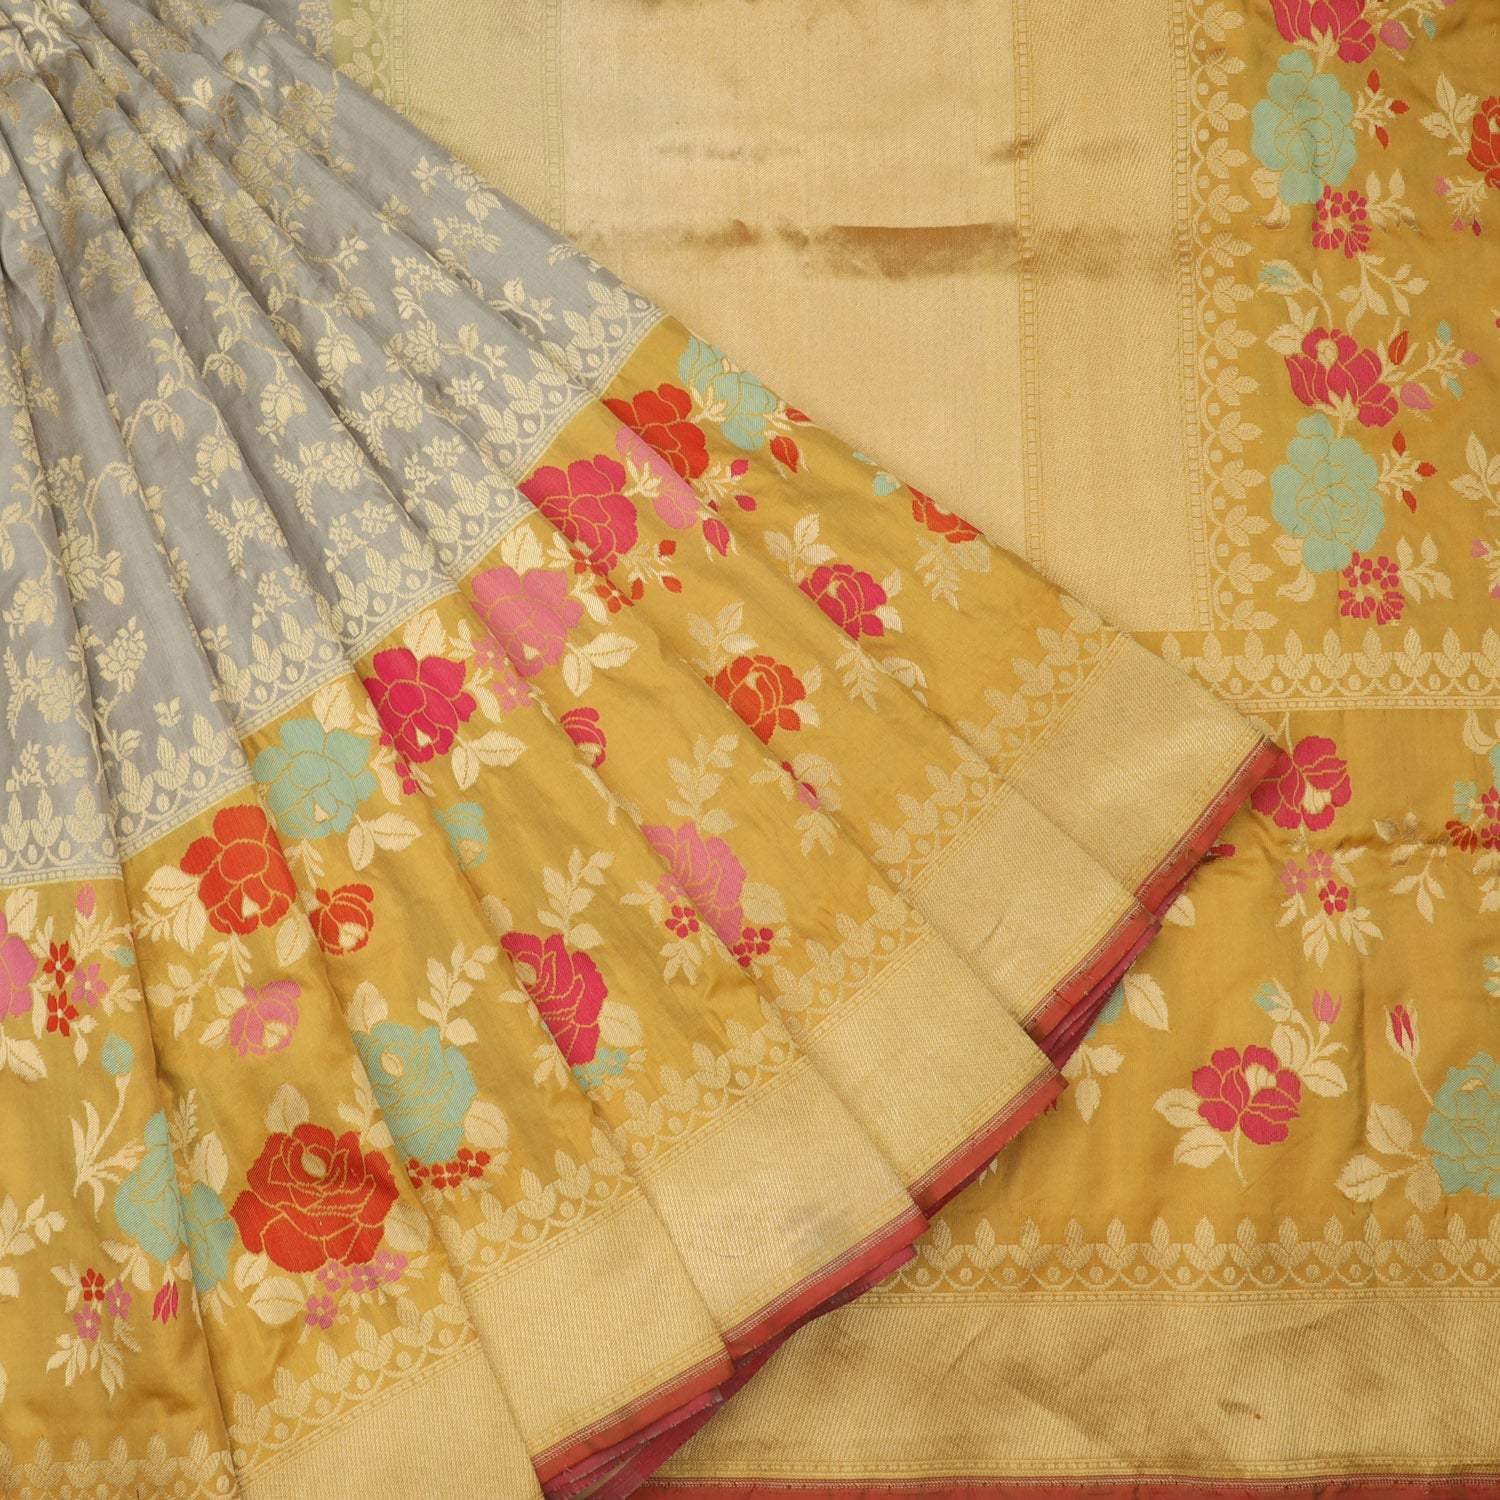 Amazon Offer On Silk Sari Buy Handloom Sari Best Cotton Silk Sari Online  Silk Sari Under 1000rs, Cotton Sari Online Silk Sari For Function Discount  On Silk Sari | Amazon Deal: एमेजॉन